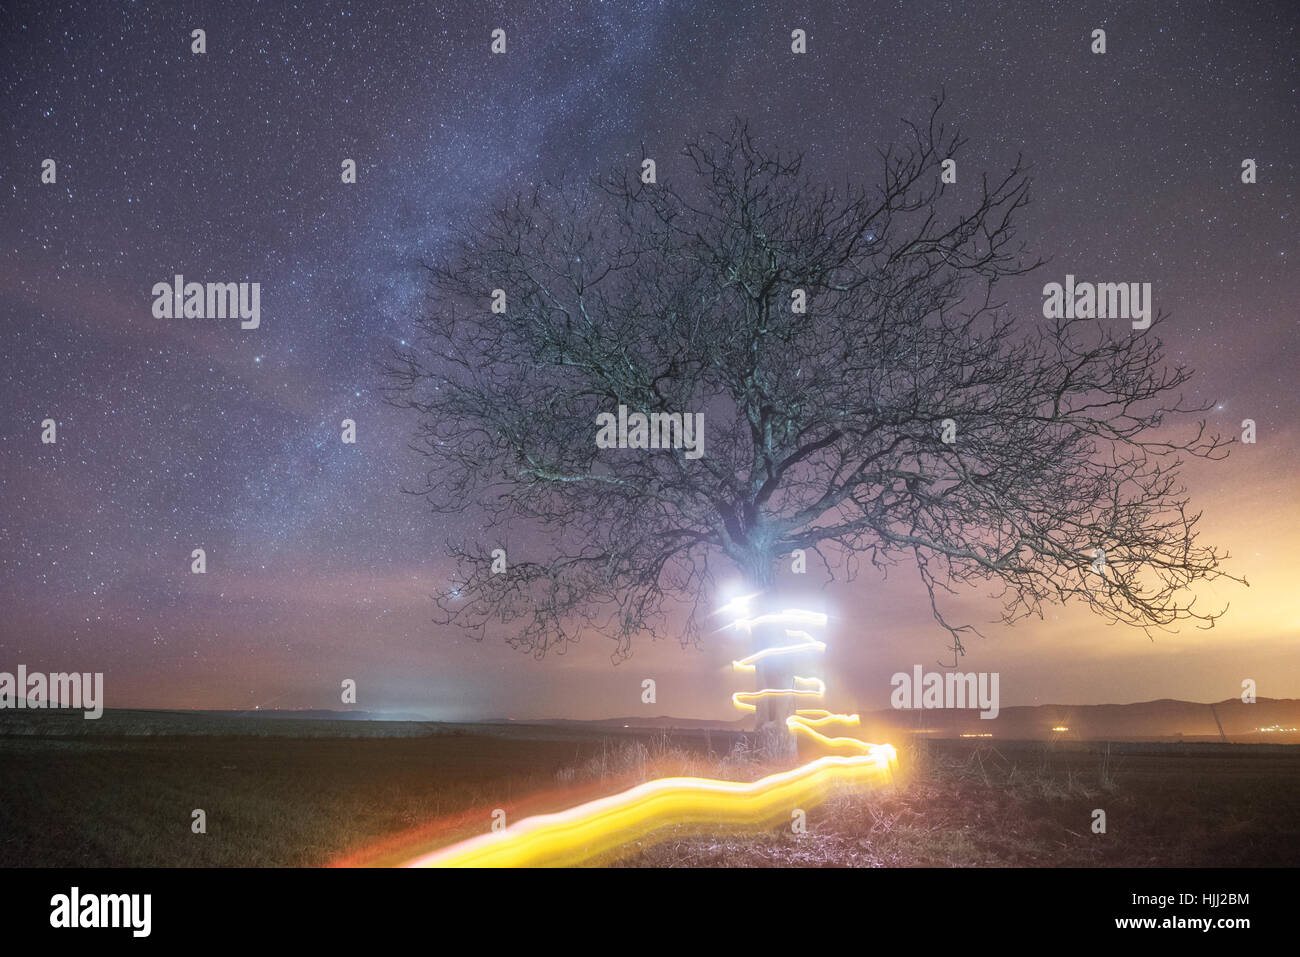 Milky way and light painting tree Stock Photo